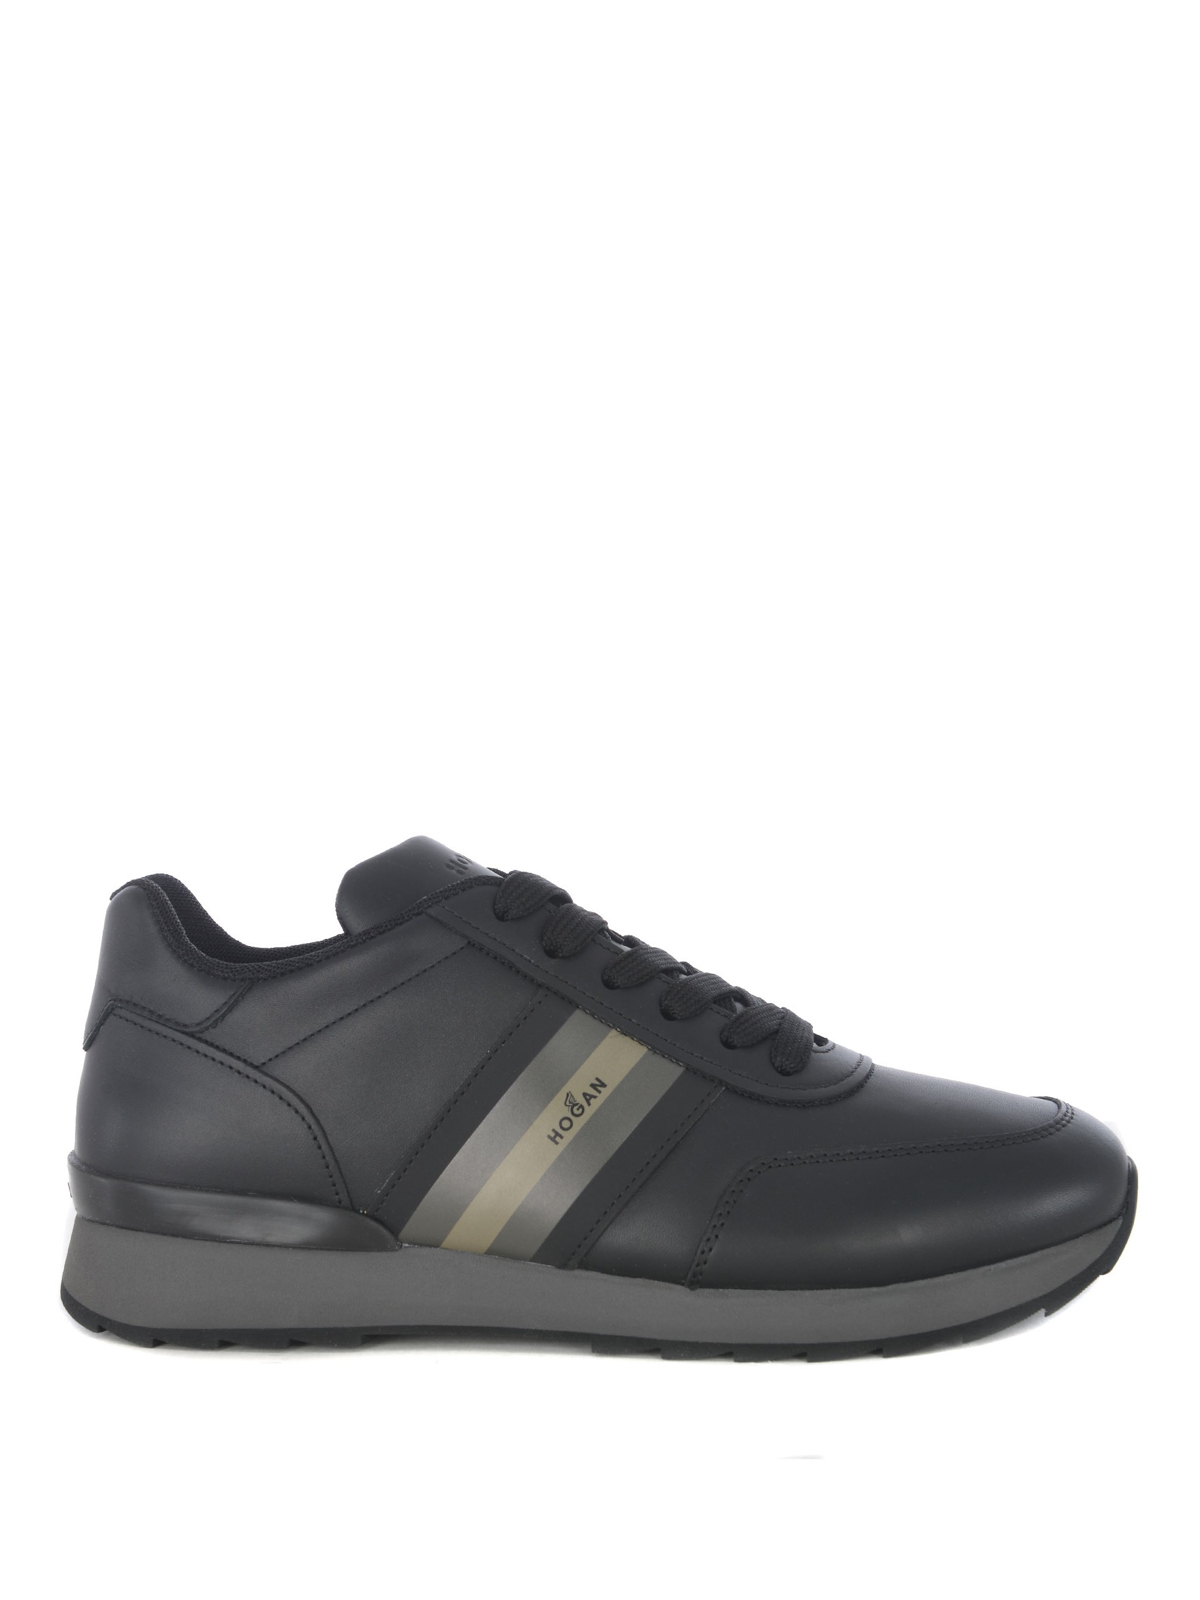 Trainers Hogan - R261 black leather sneakers - GYM2610AY40JBFB999